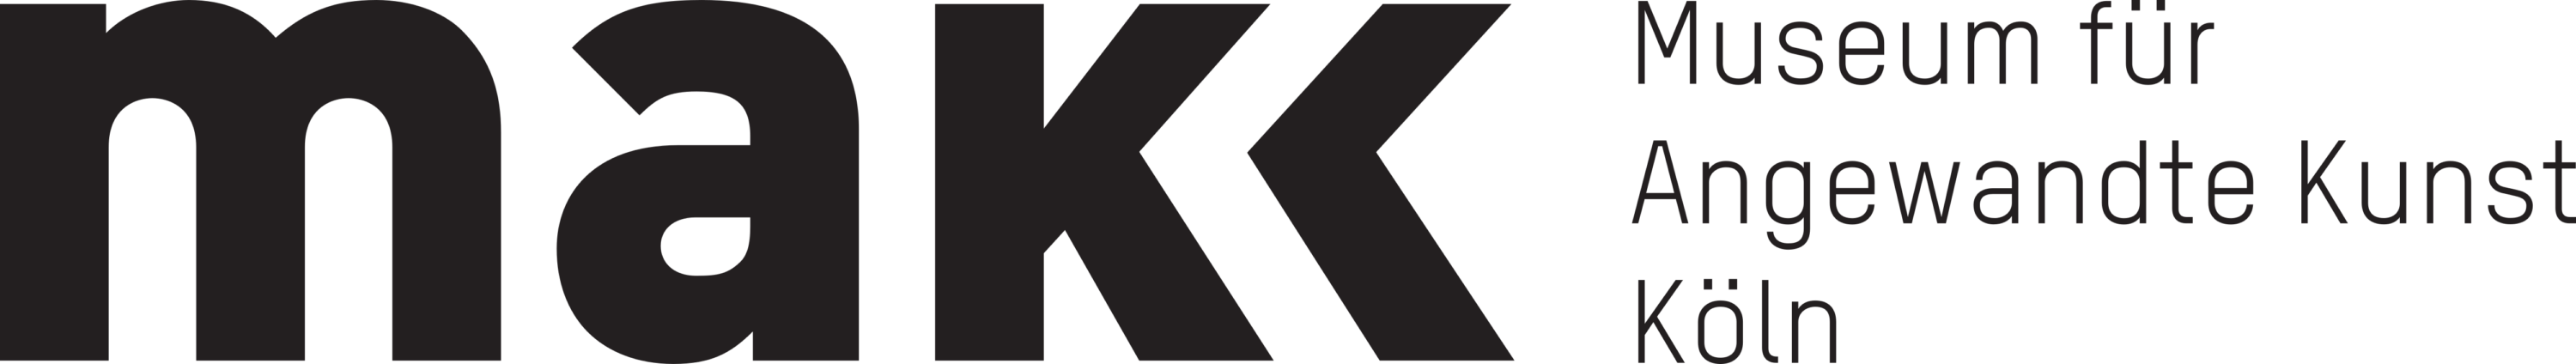 Makk Koeln Logo